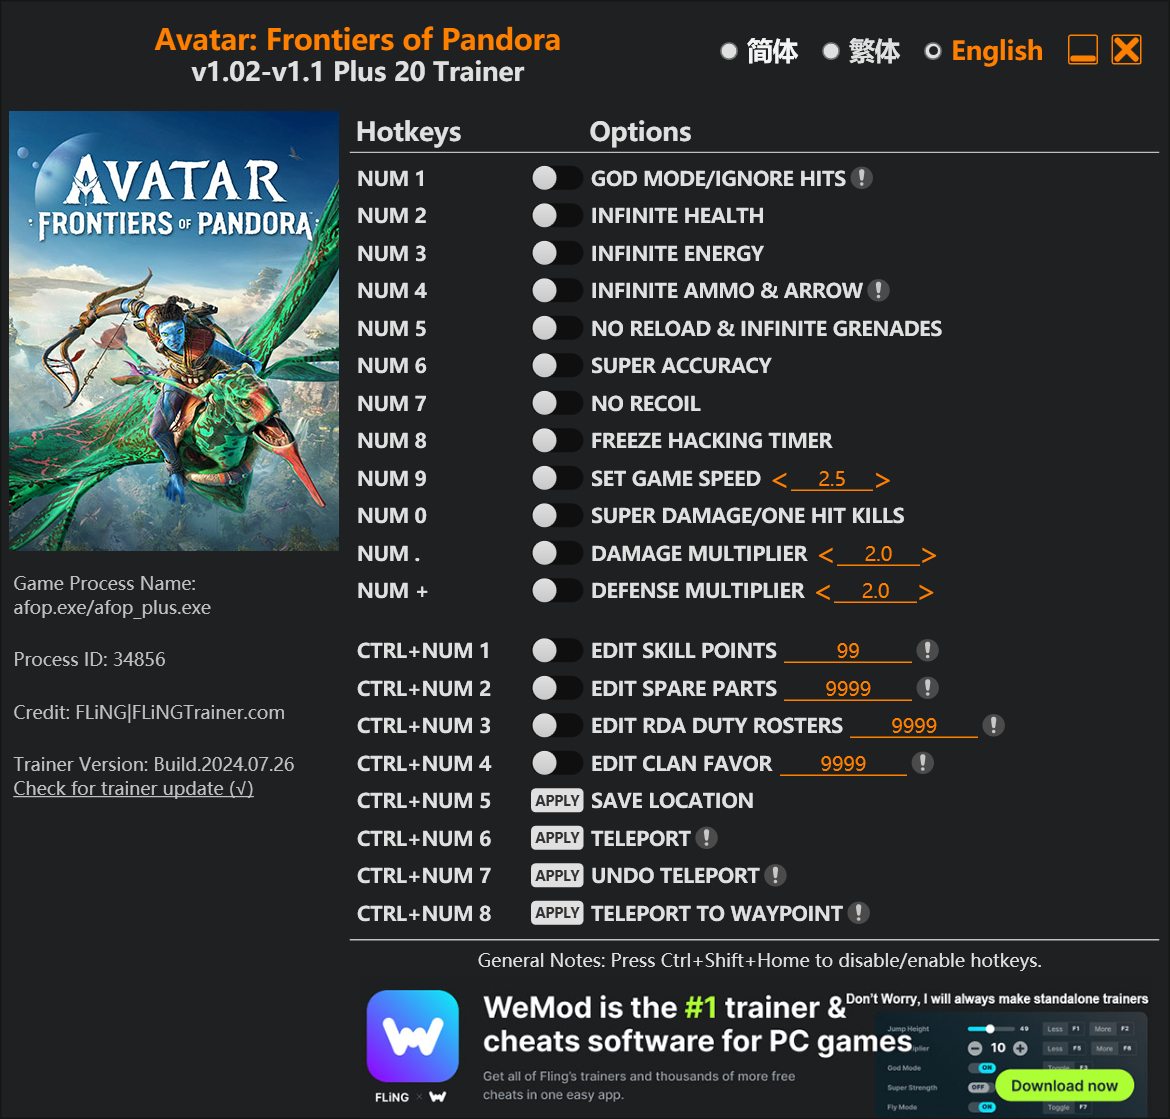 Avatar: Frontiers of Pandora Trainer/Cheat